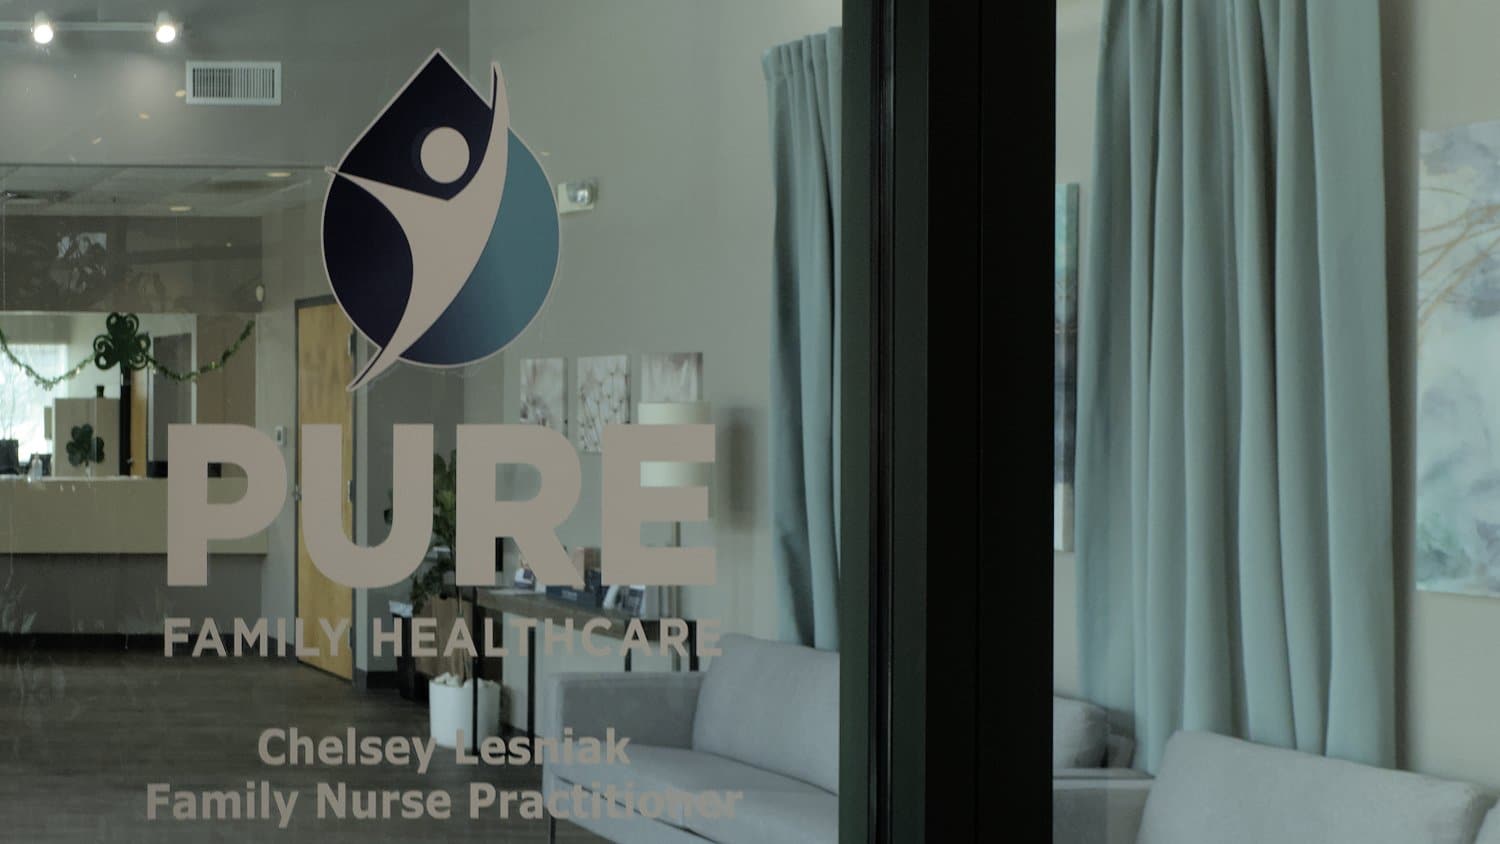 Pure Family Healthcare logo.